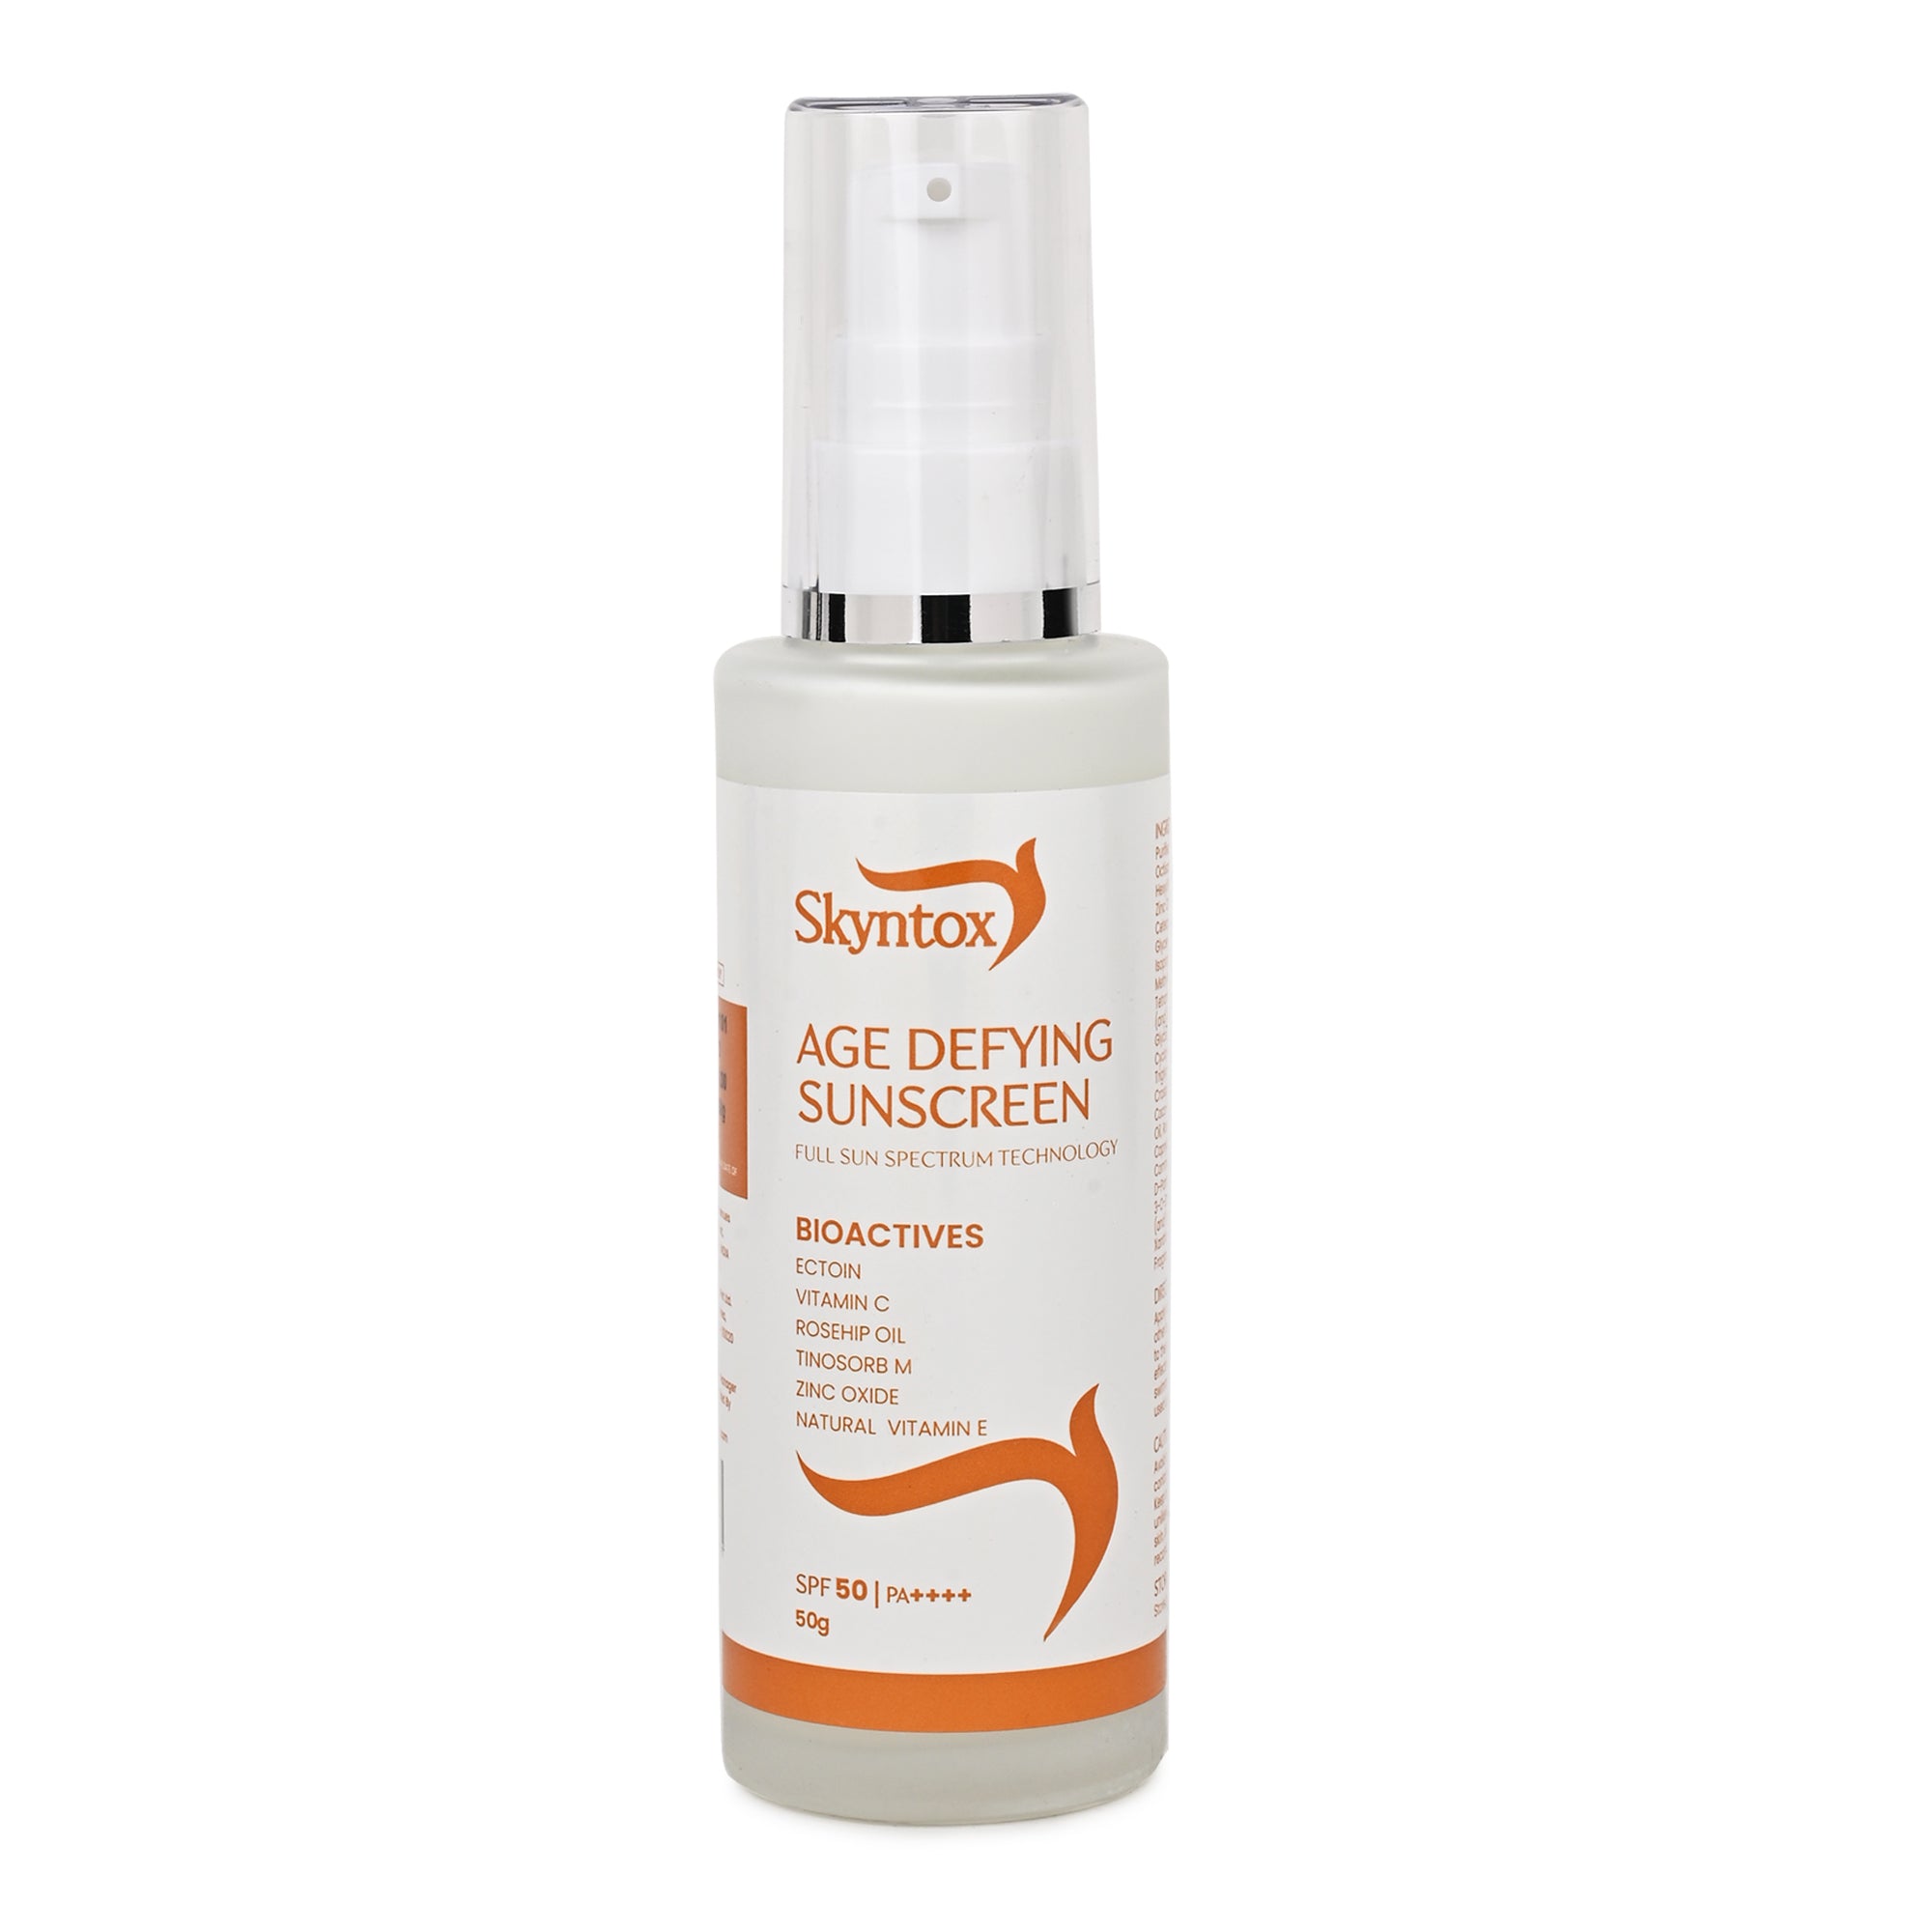 Skyntox Age Defying Sunscreen Cream SPF 50 PA++++